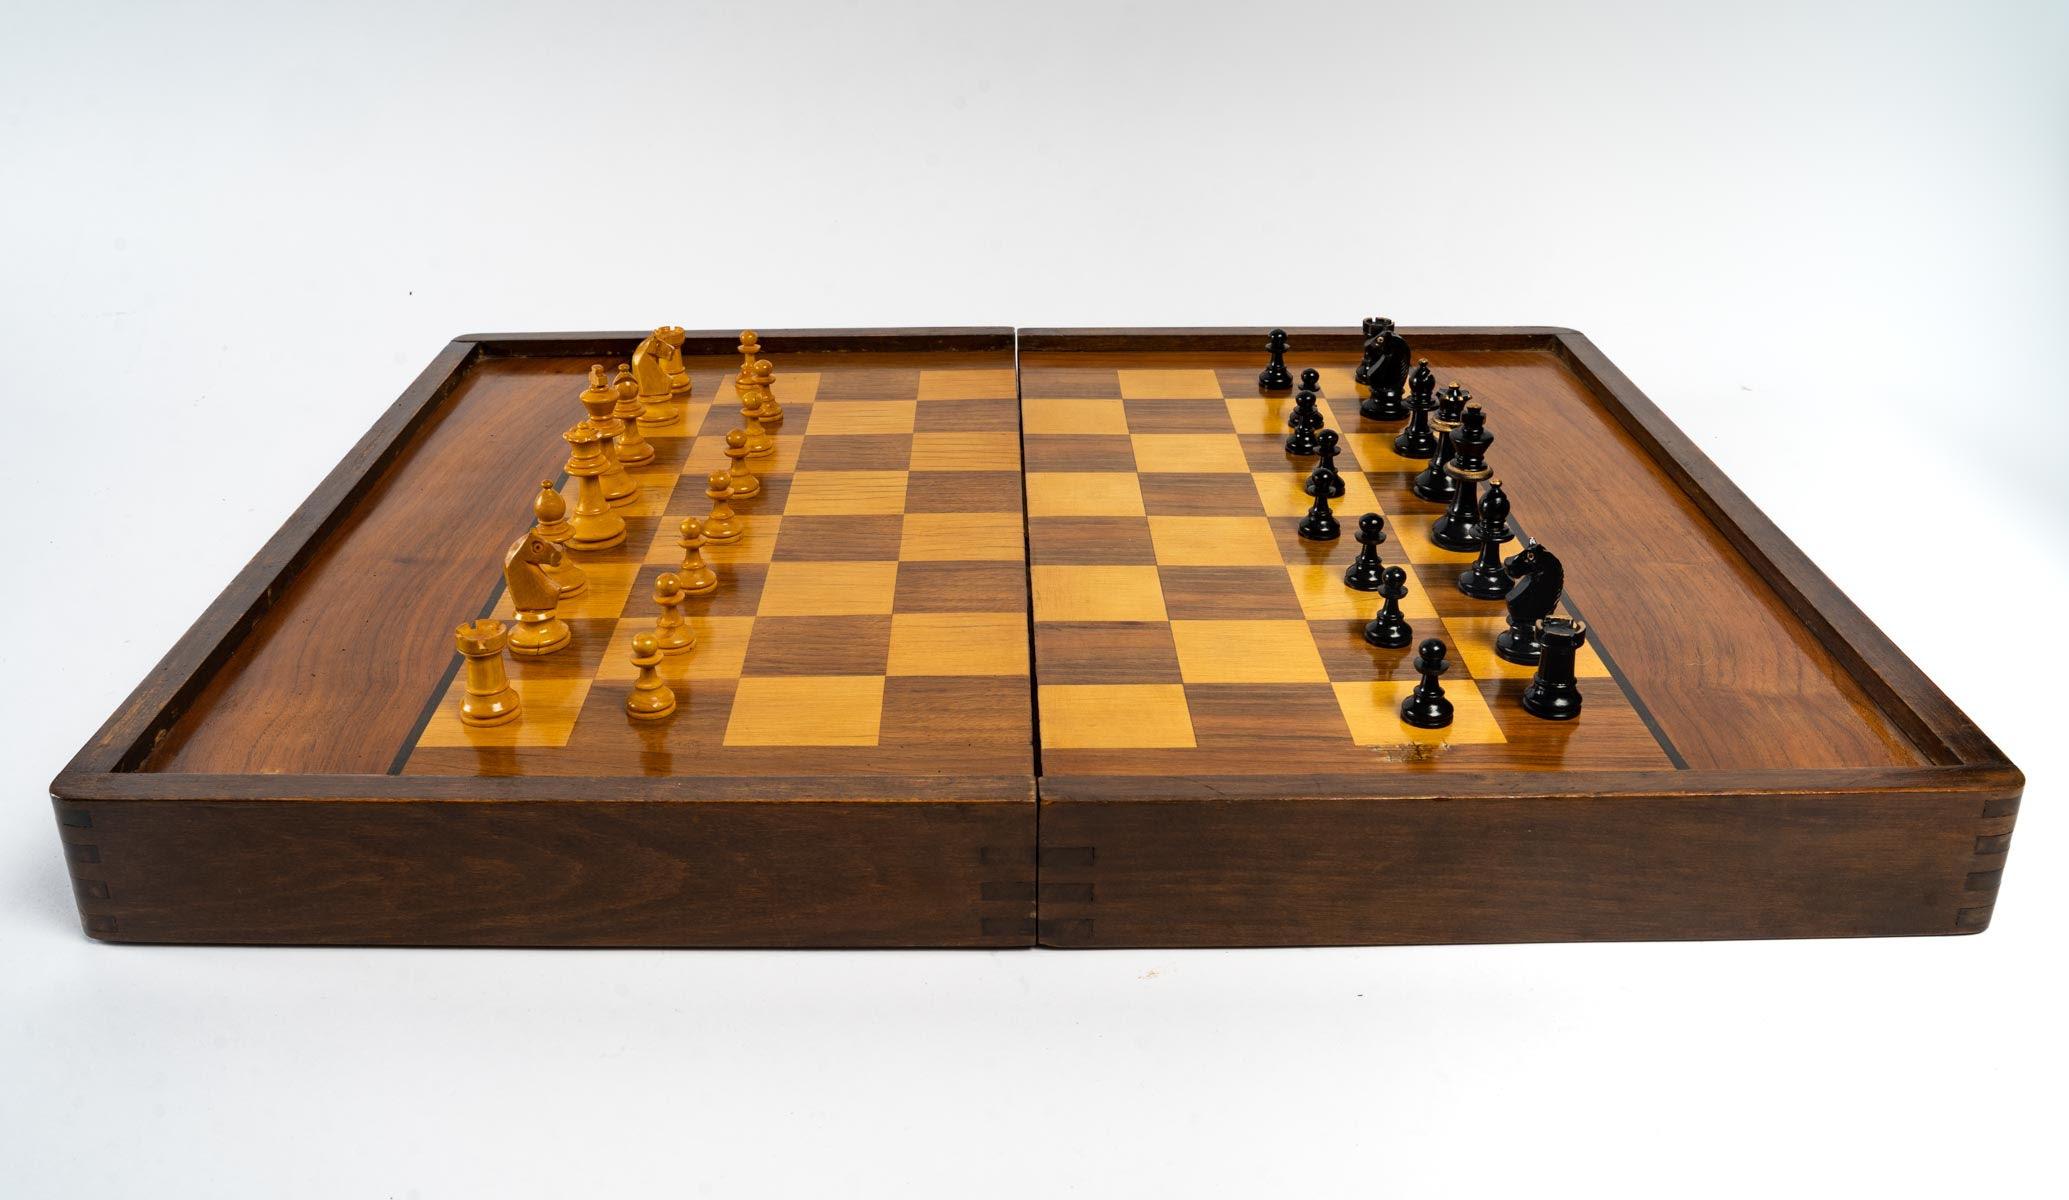 Chessboard, Backgammon, 20th century.
Closed - H: 10 cm, W: 46 cm, D: 28 cm;
Open - H: 10 cm, W: 92 cm, D: 28 cm.